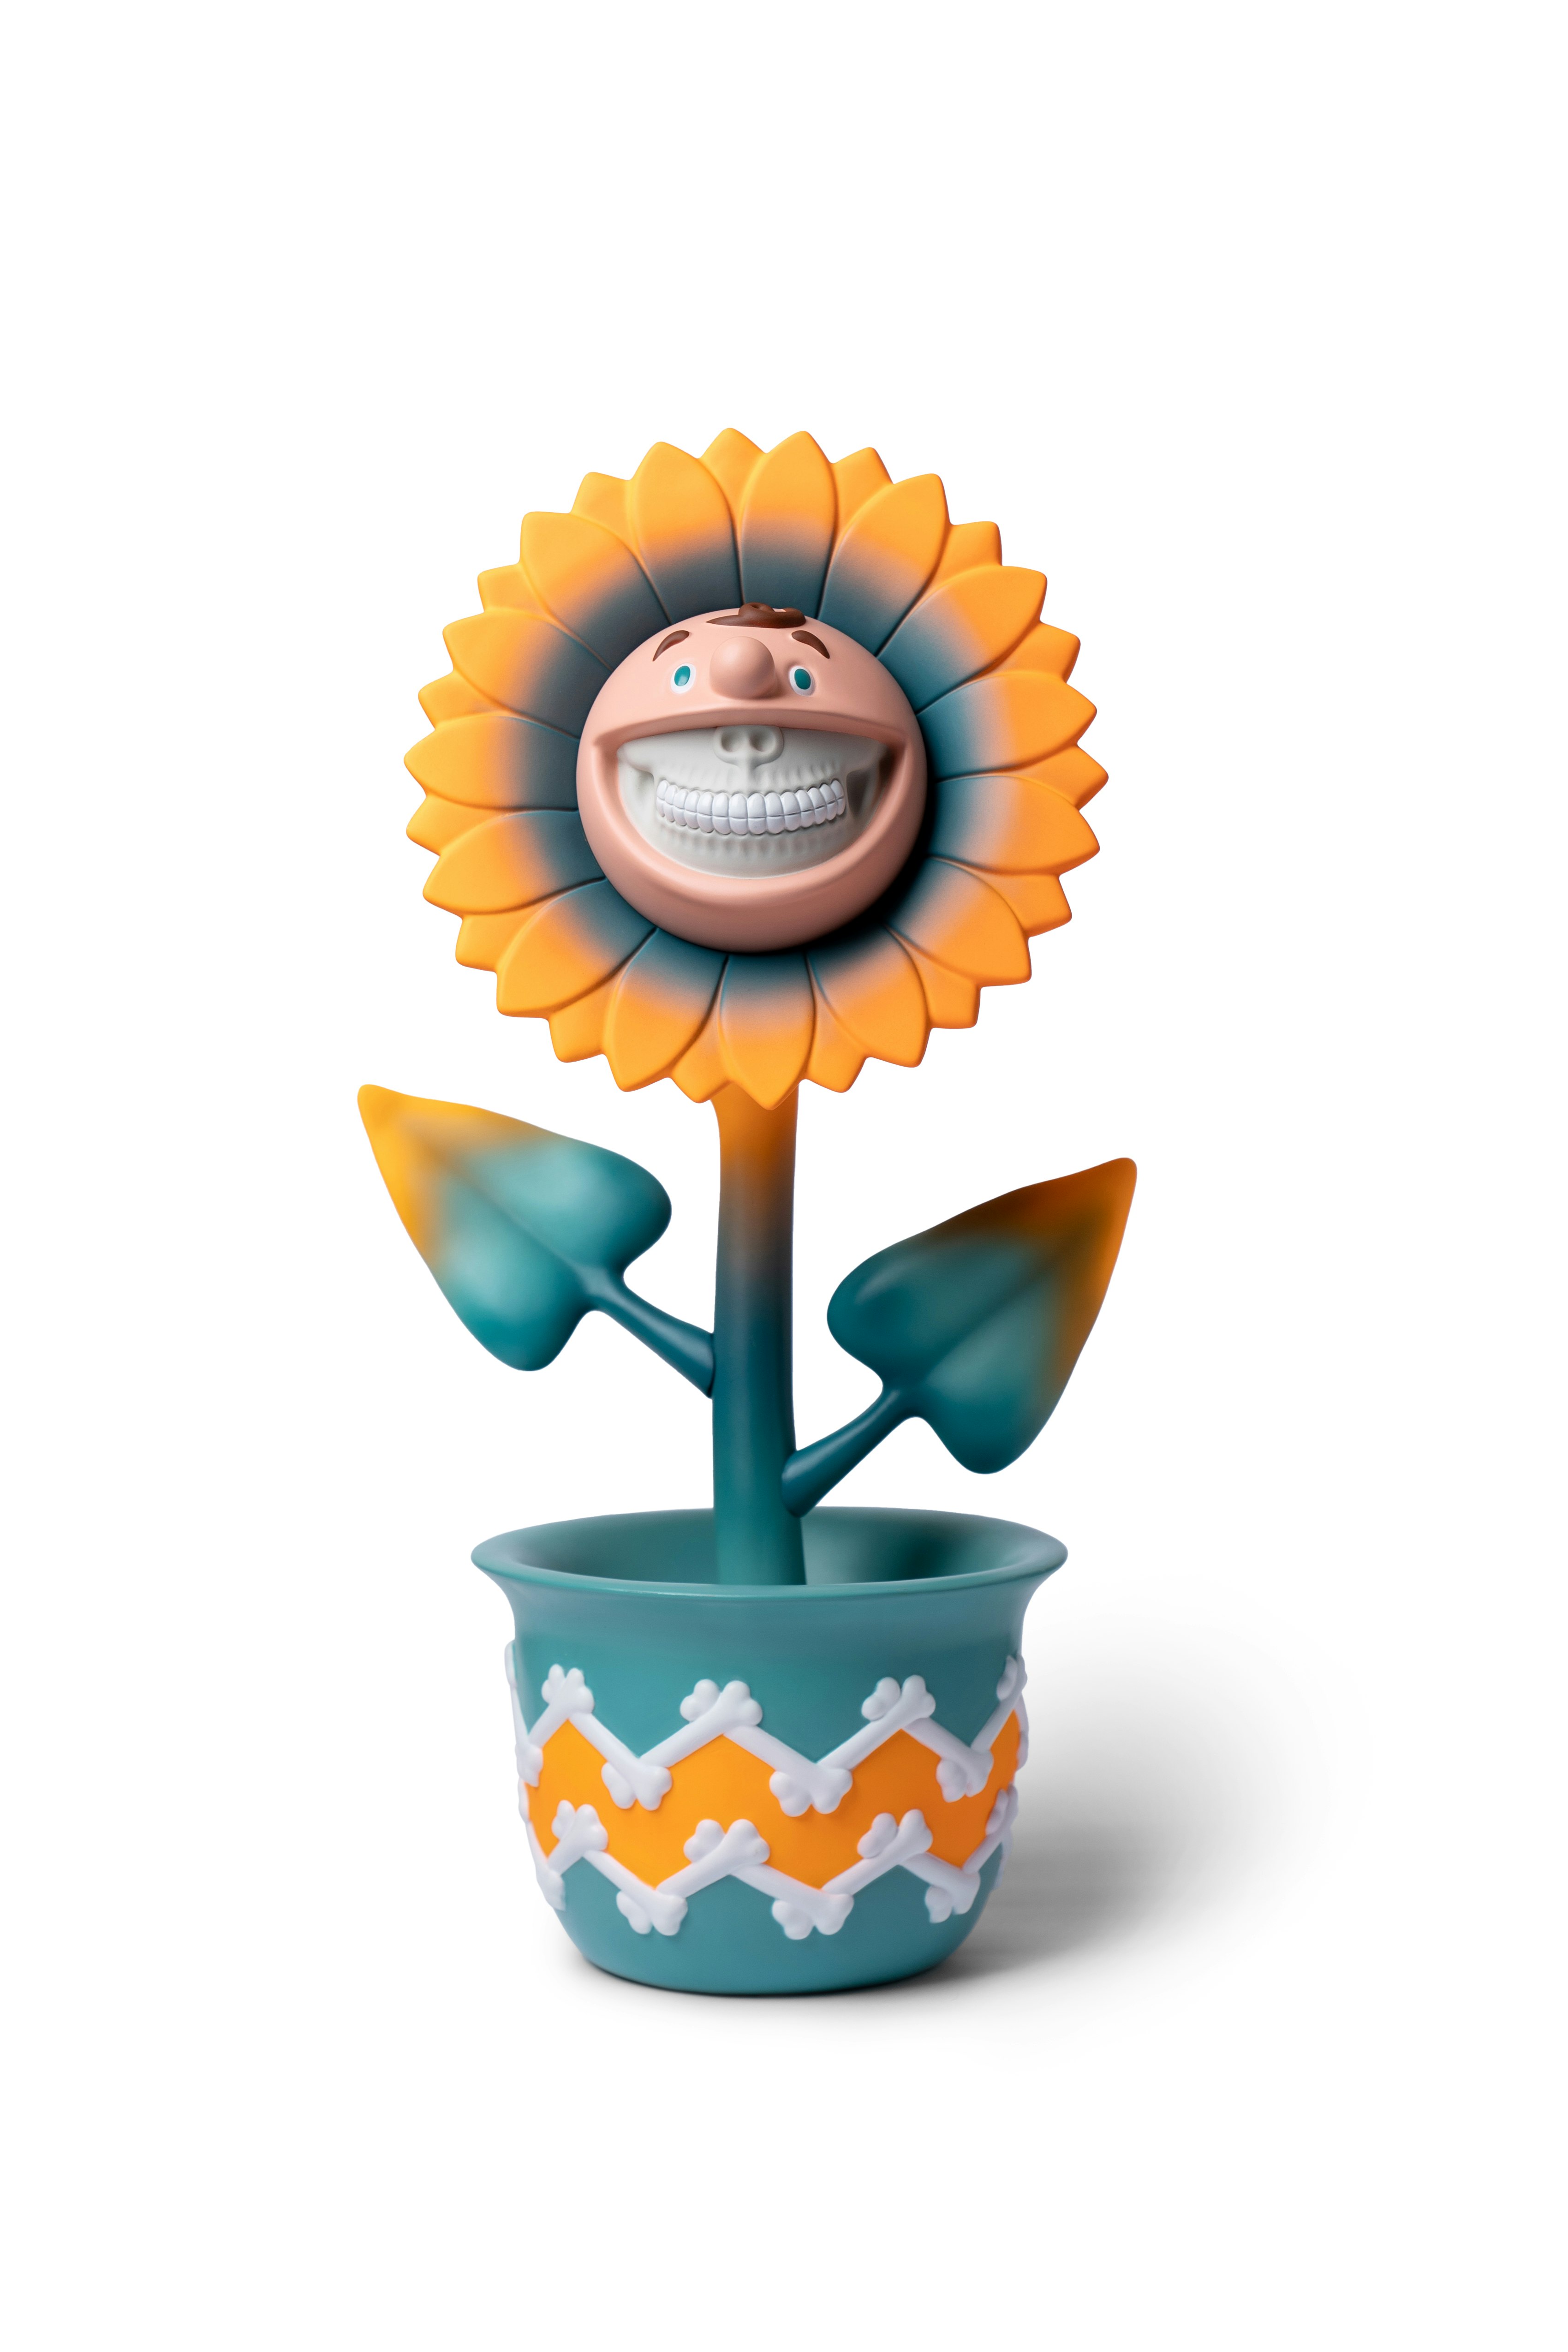 Charlie Grin "Sunflower" image